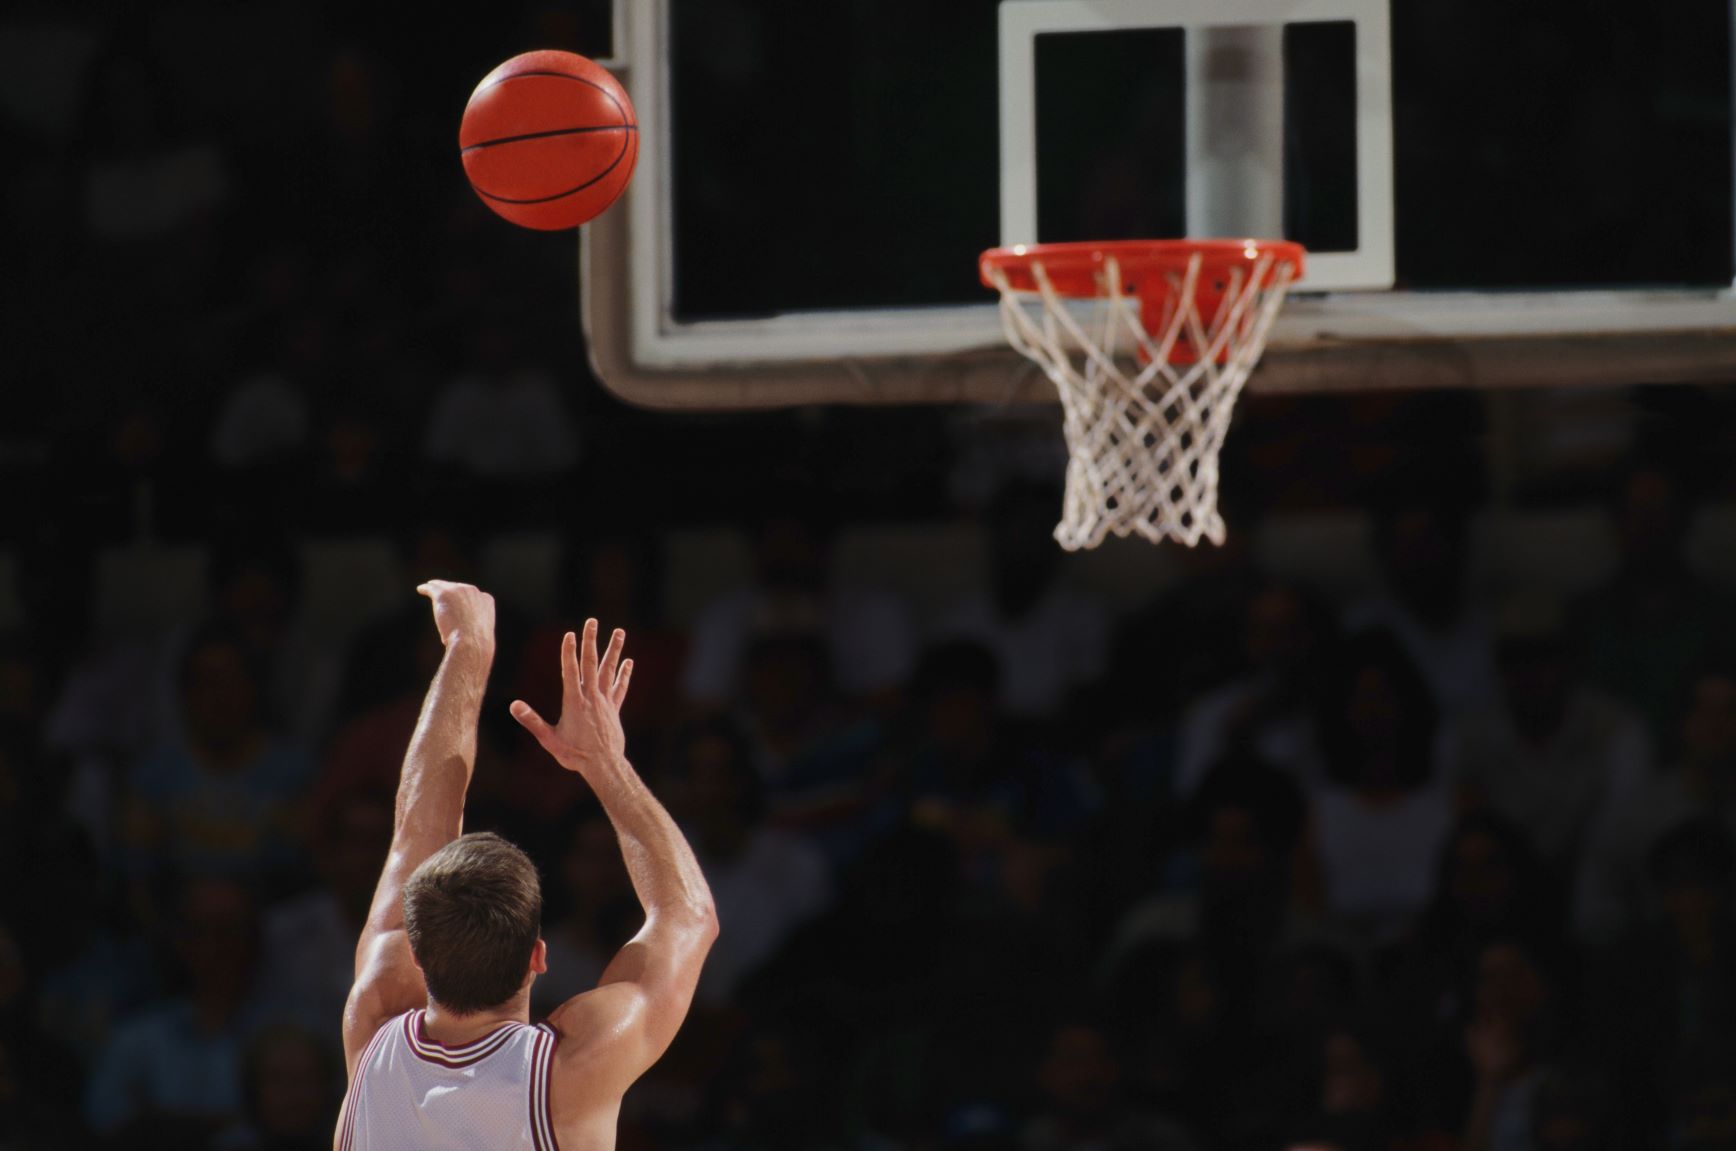 Basketball player throwing ball toward basket